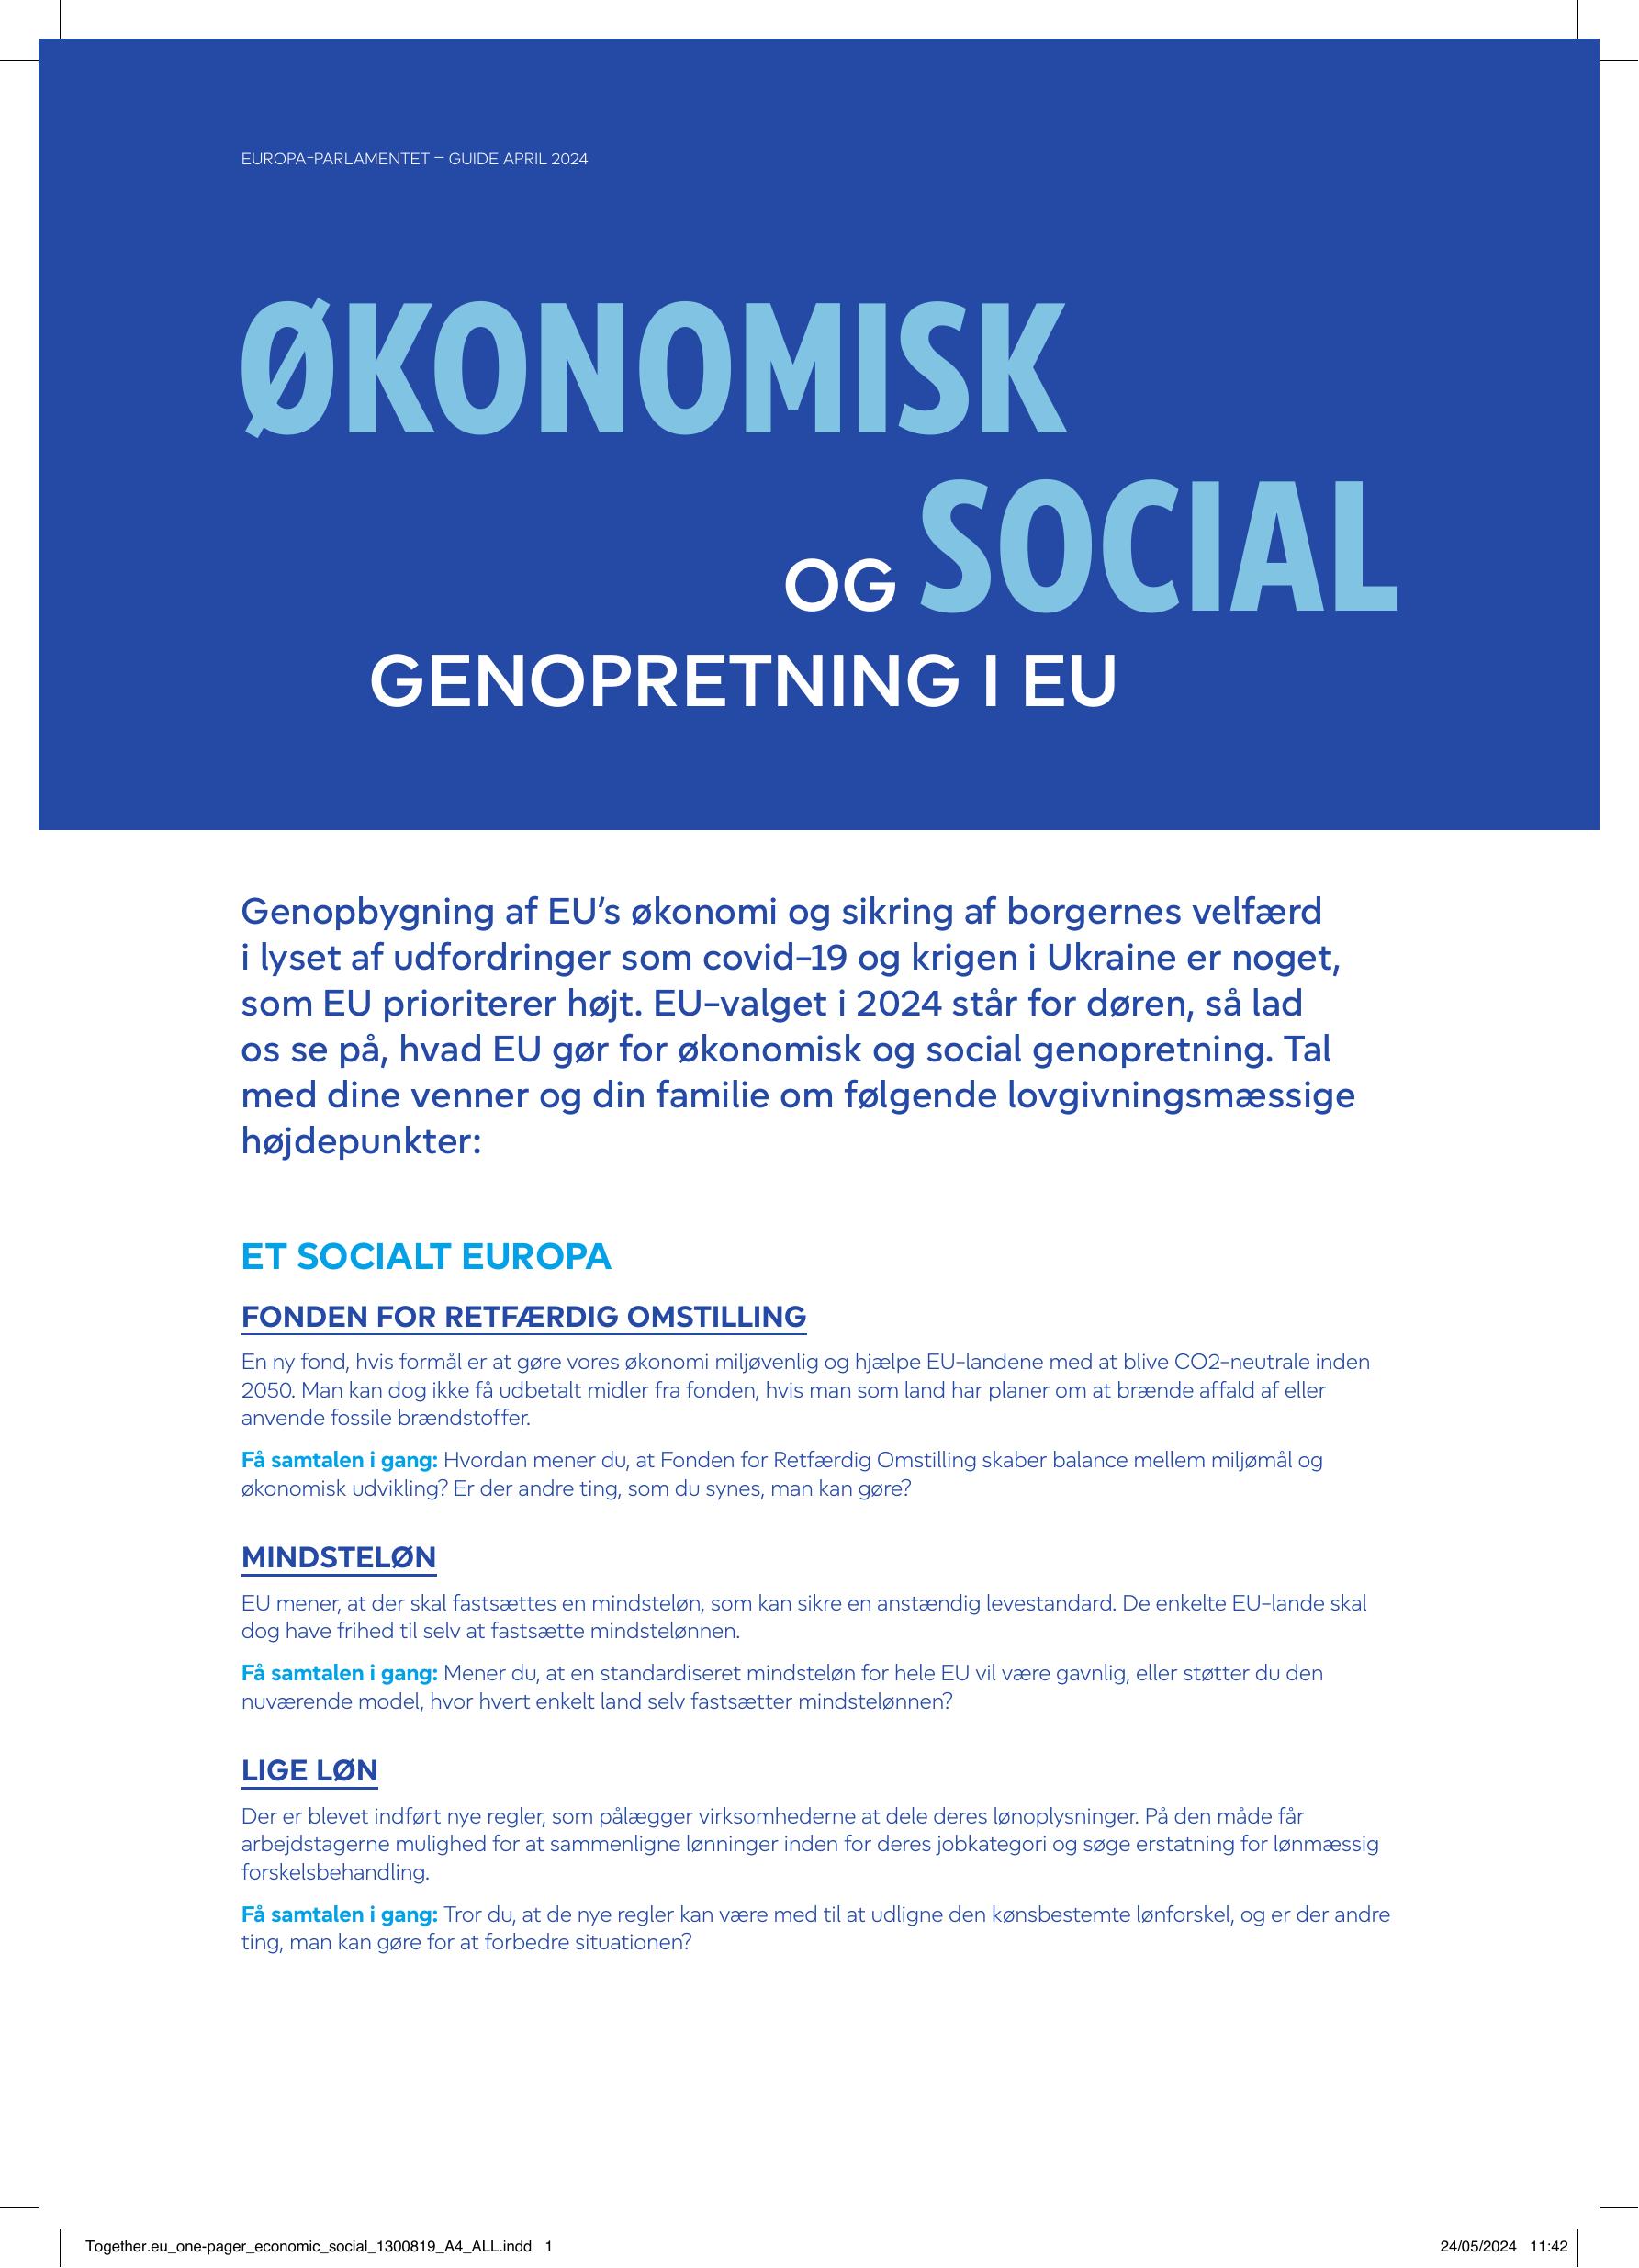 Together.eu_one-pager_economic_social_print.pdf